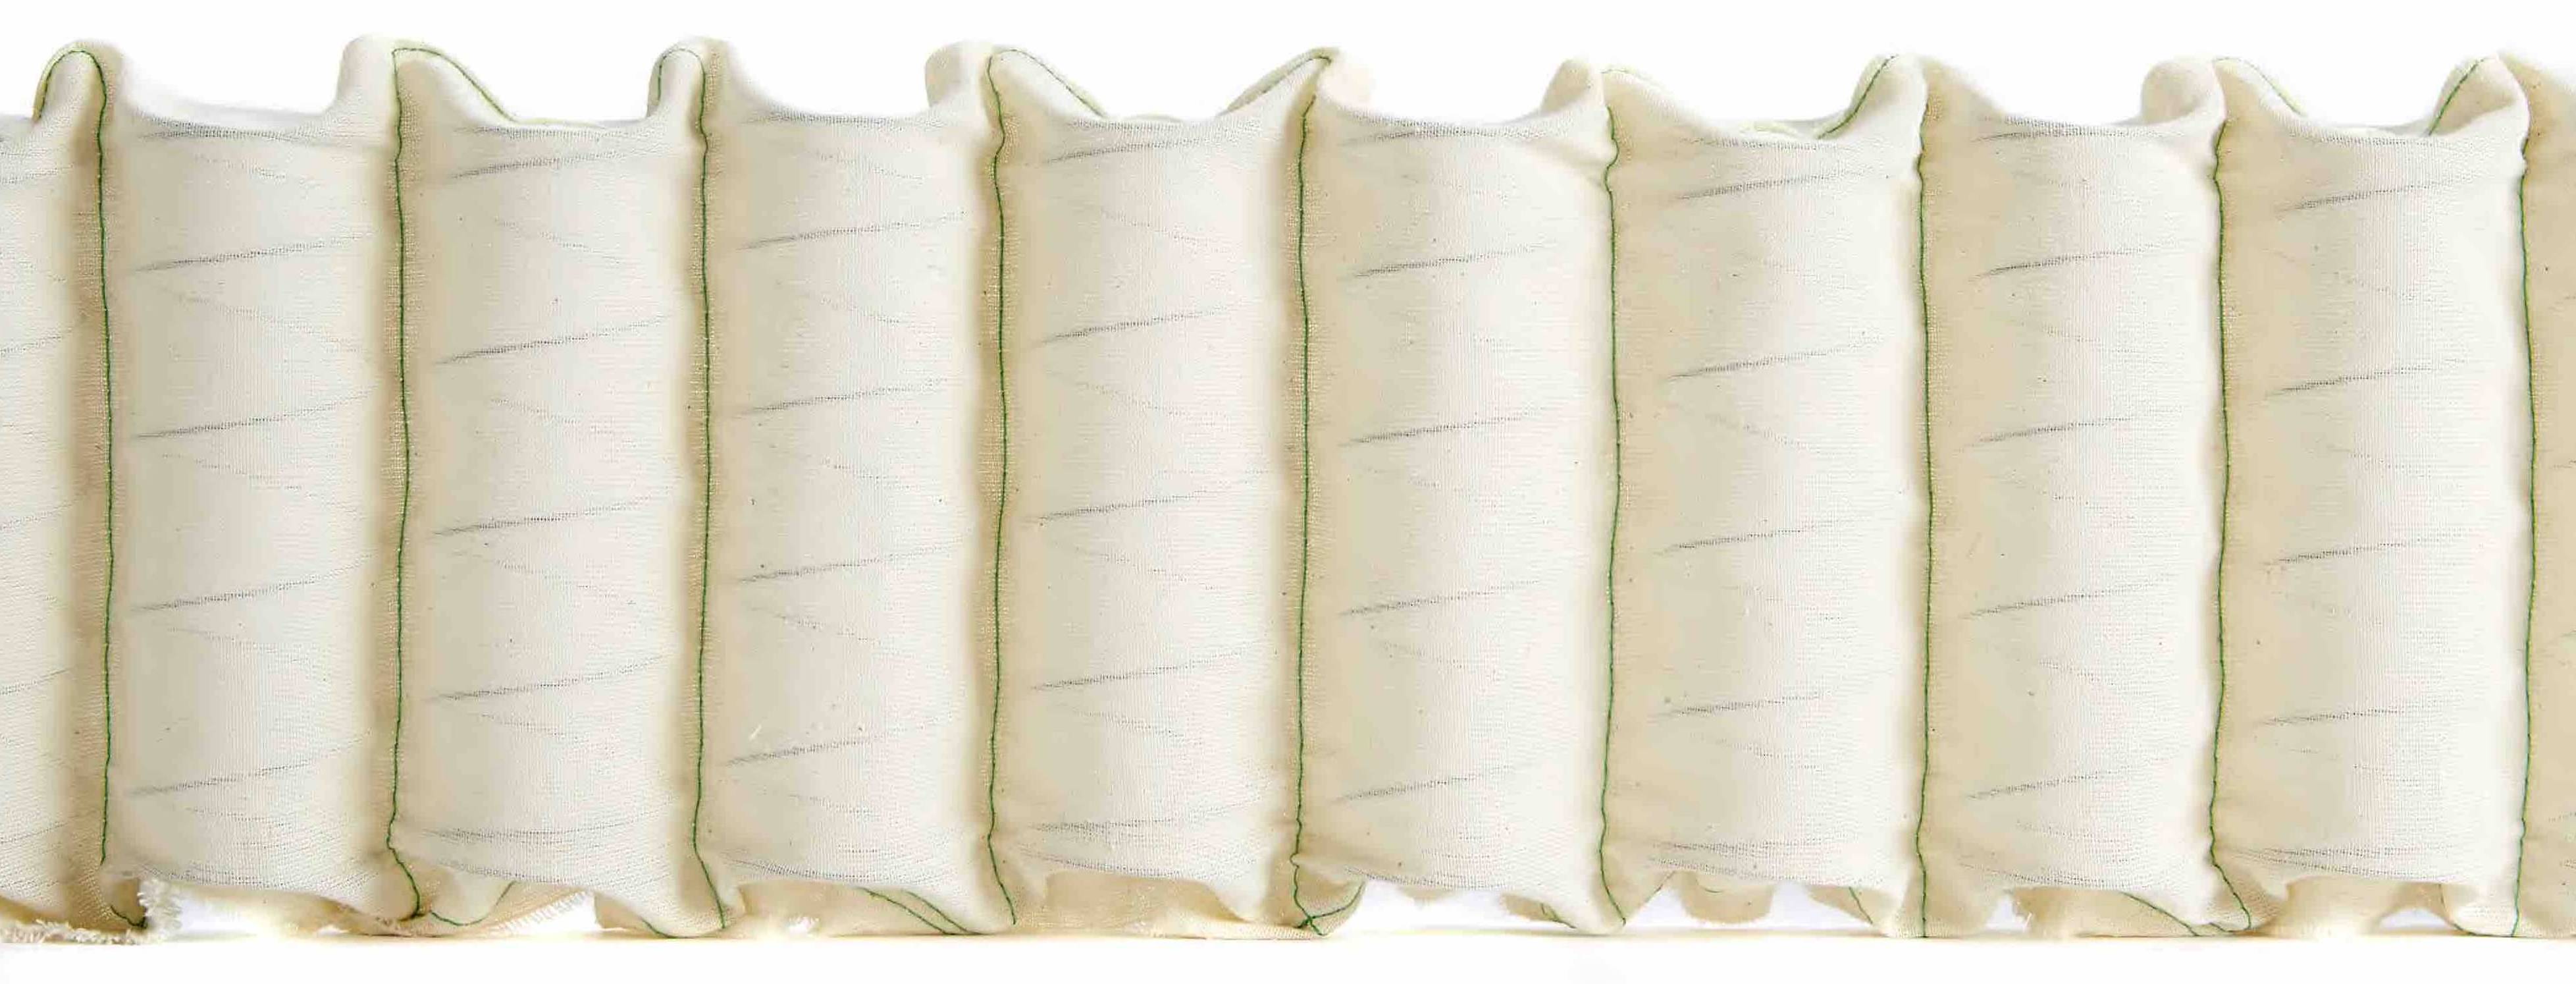 Calico soft mattress